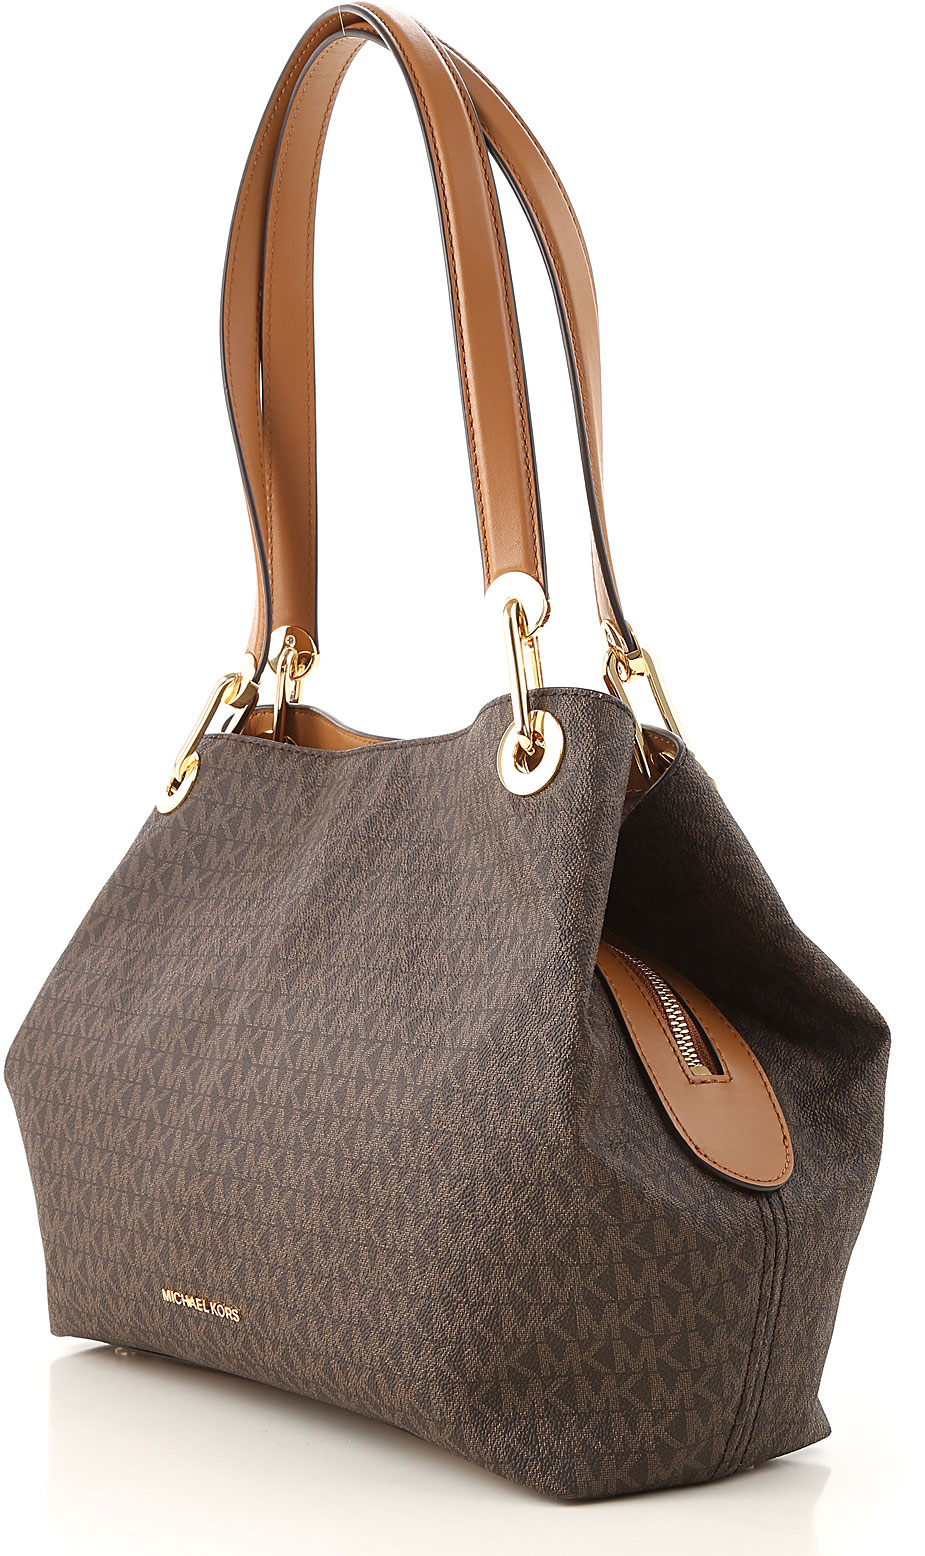 Handbags Michael Kors, Style code: 30h6grxe3v-200-